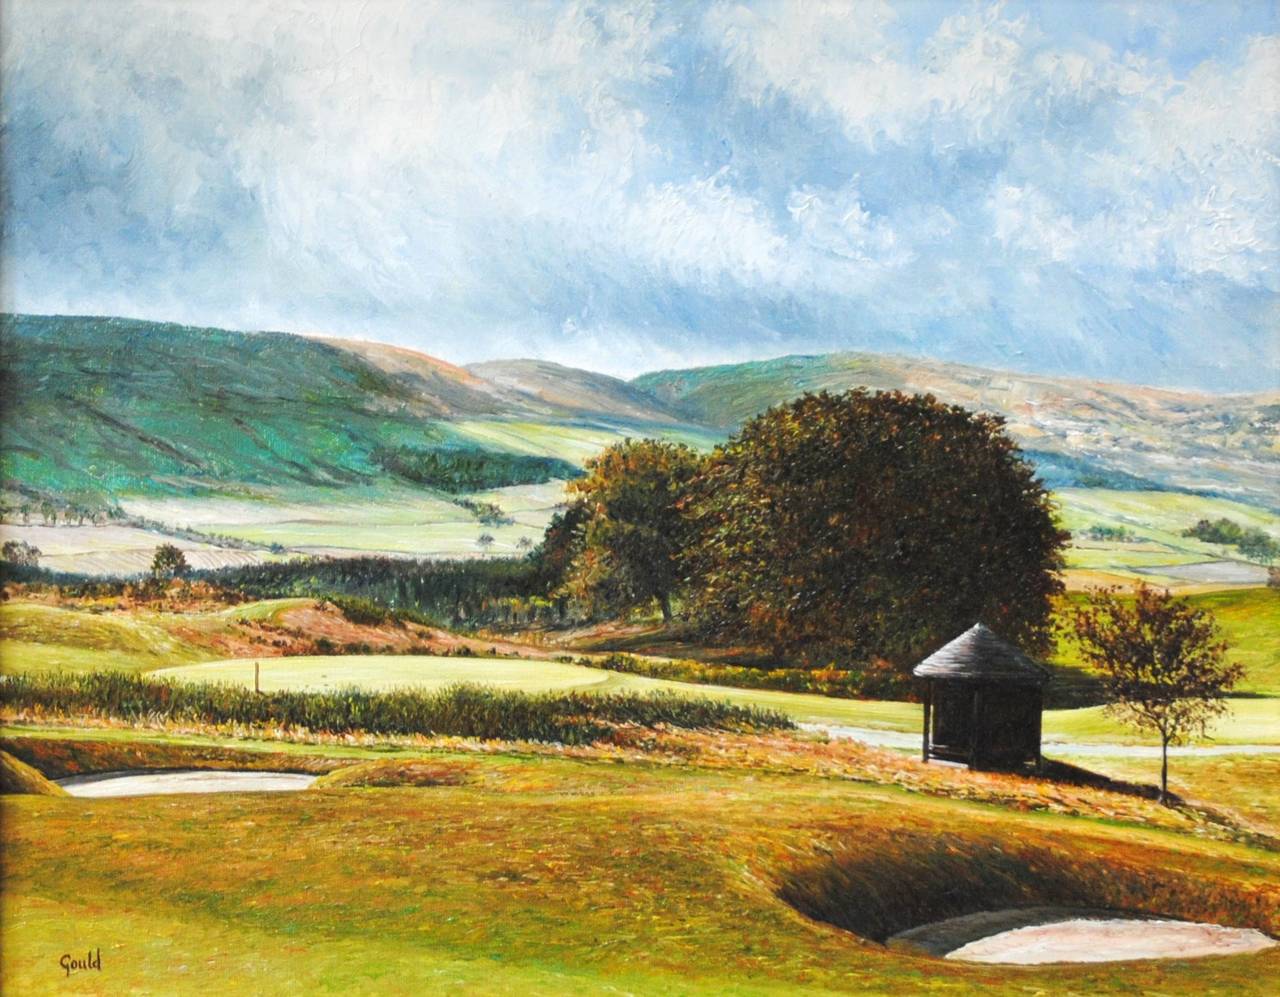 Robert Gould Landscape Painting - Gleneagles Golf Course, Scotland